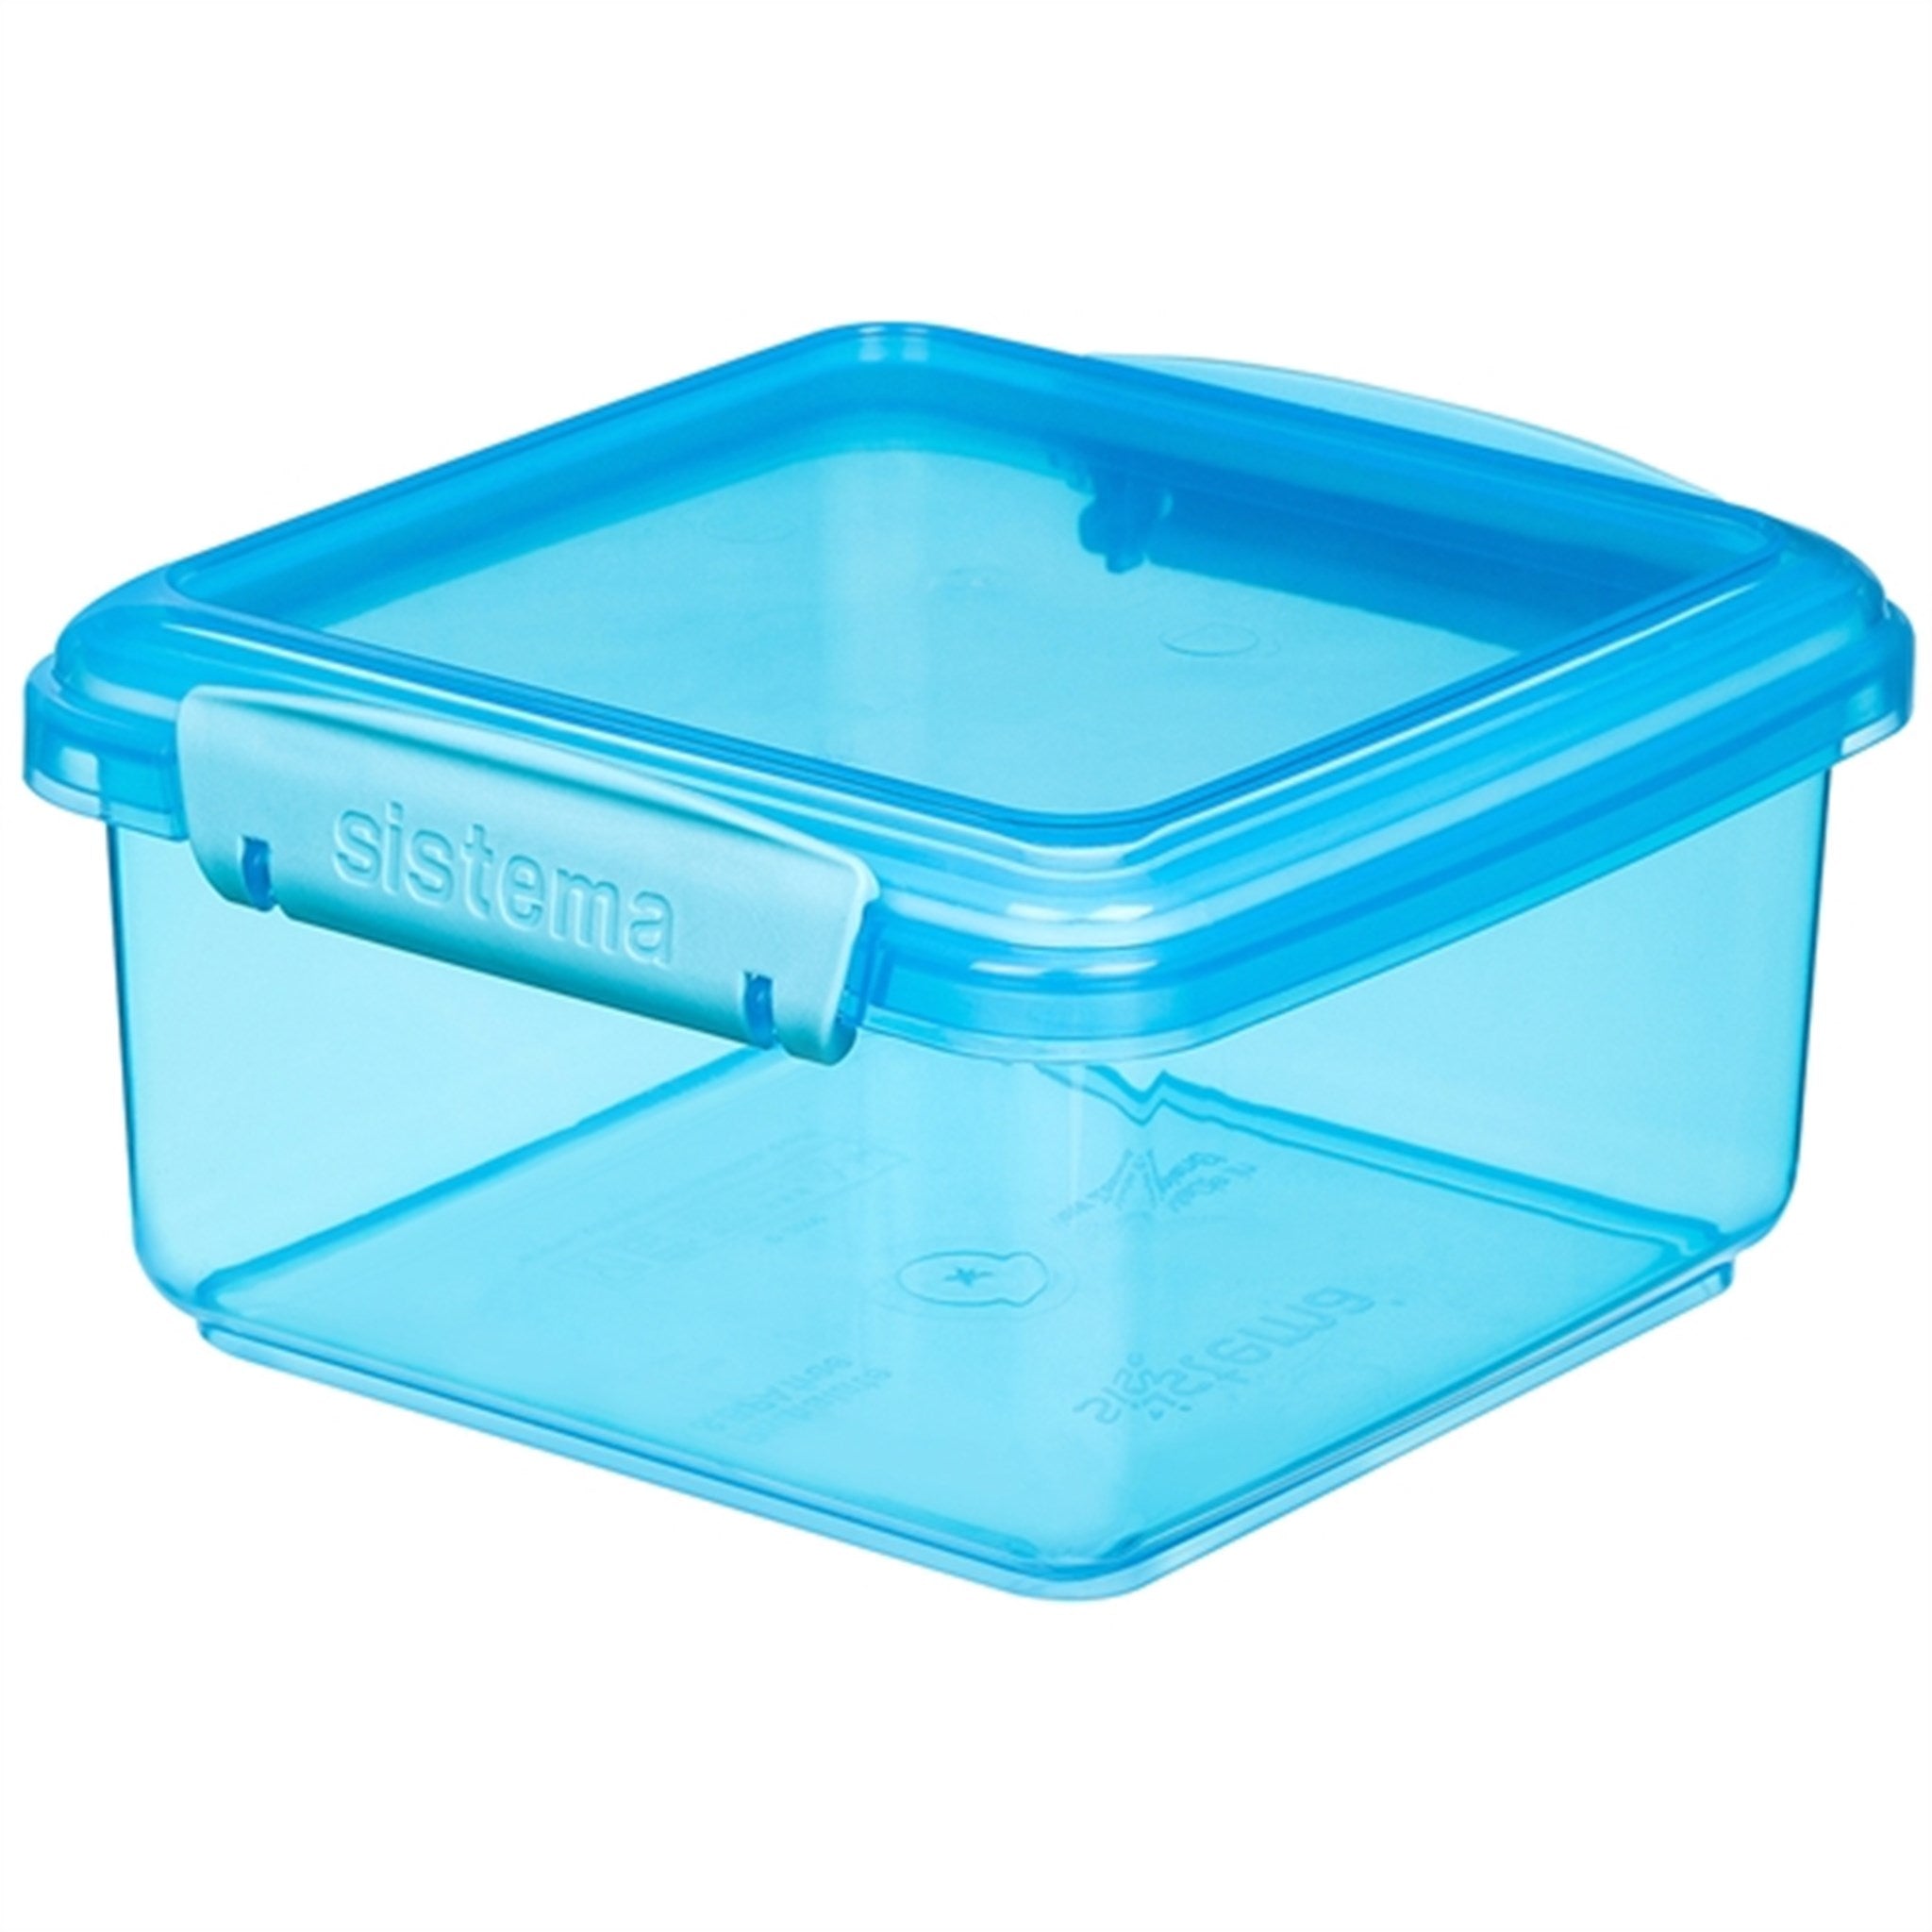 Sistema Lunch Plus Lunch Box 1,2 L Blue